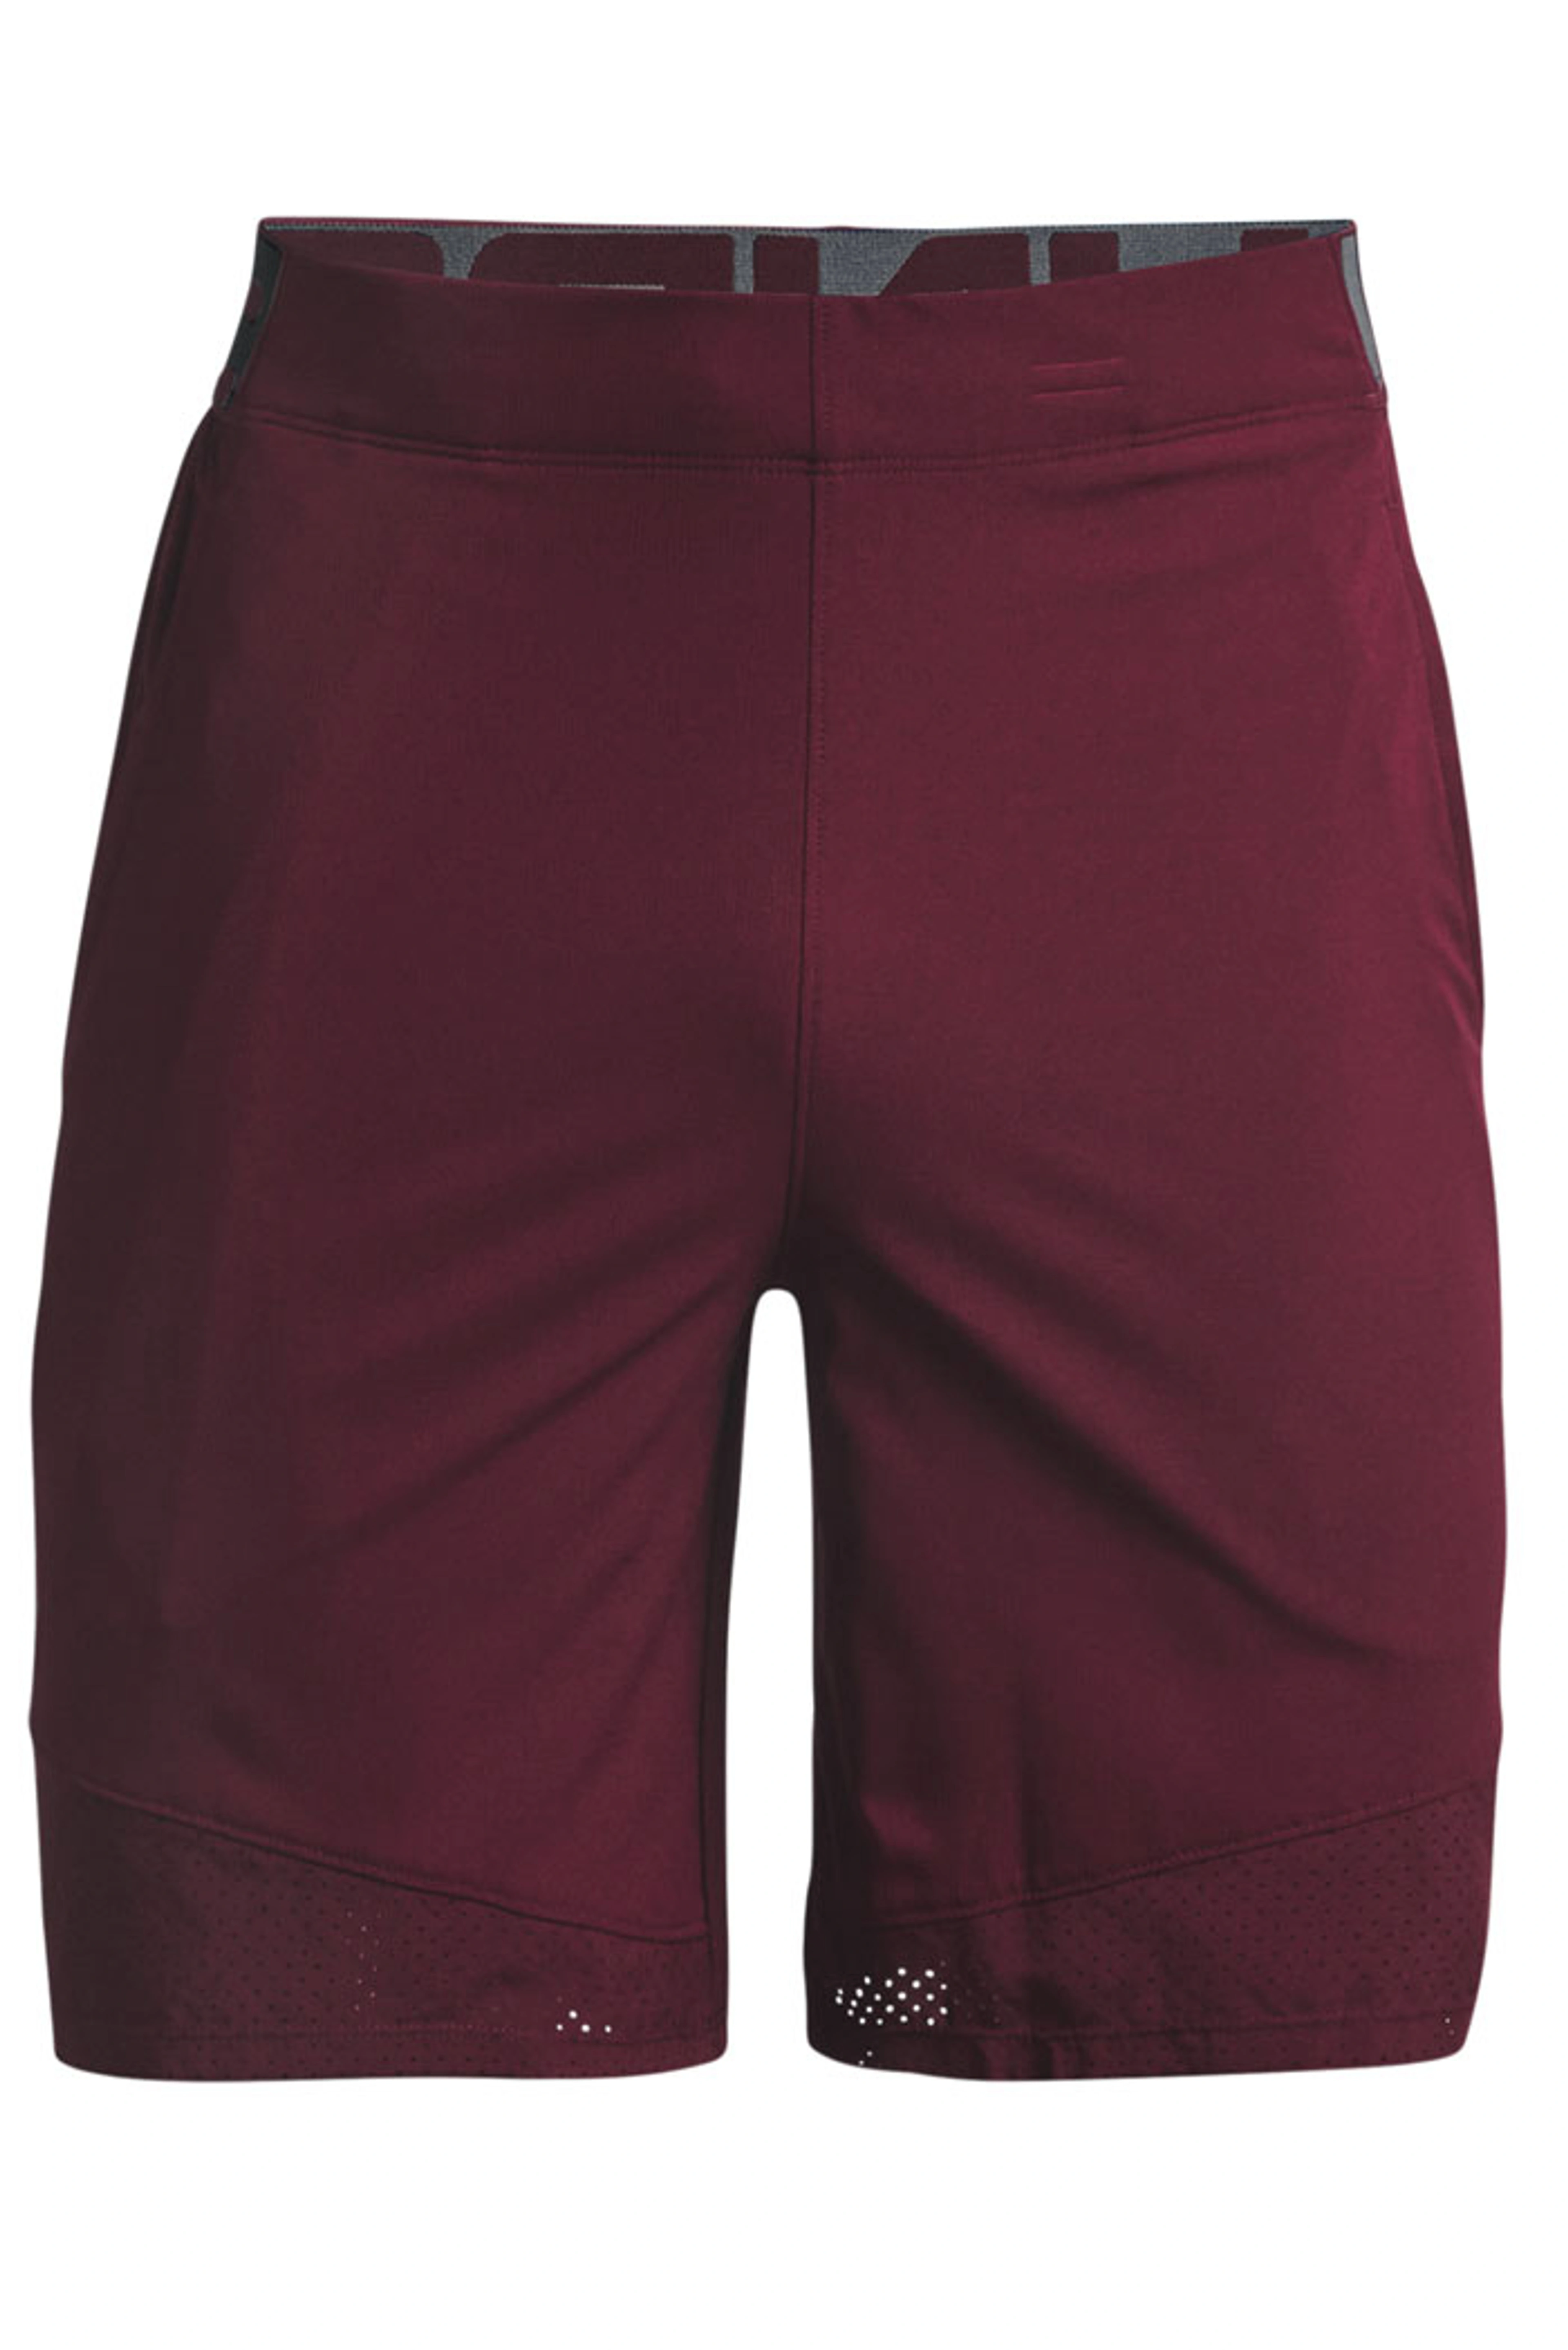 UA Vanish Woven Shorts